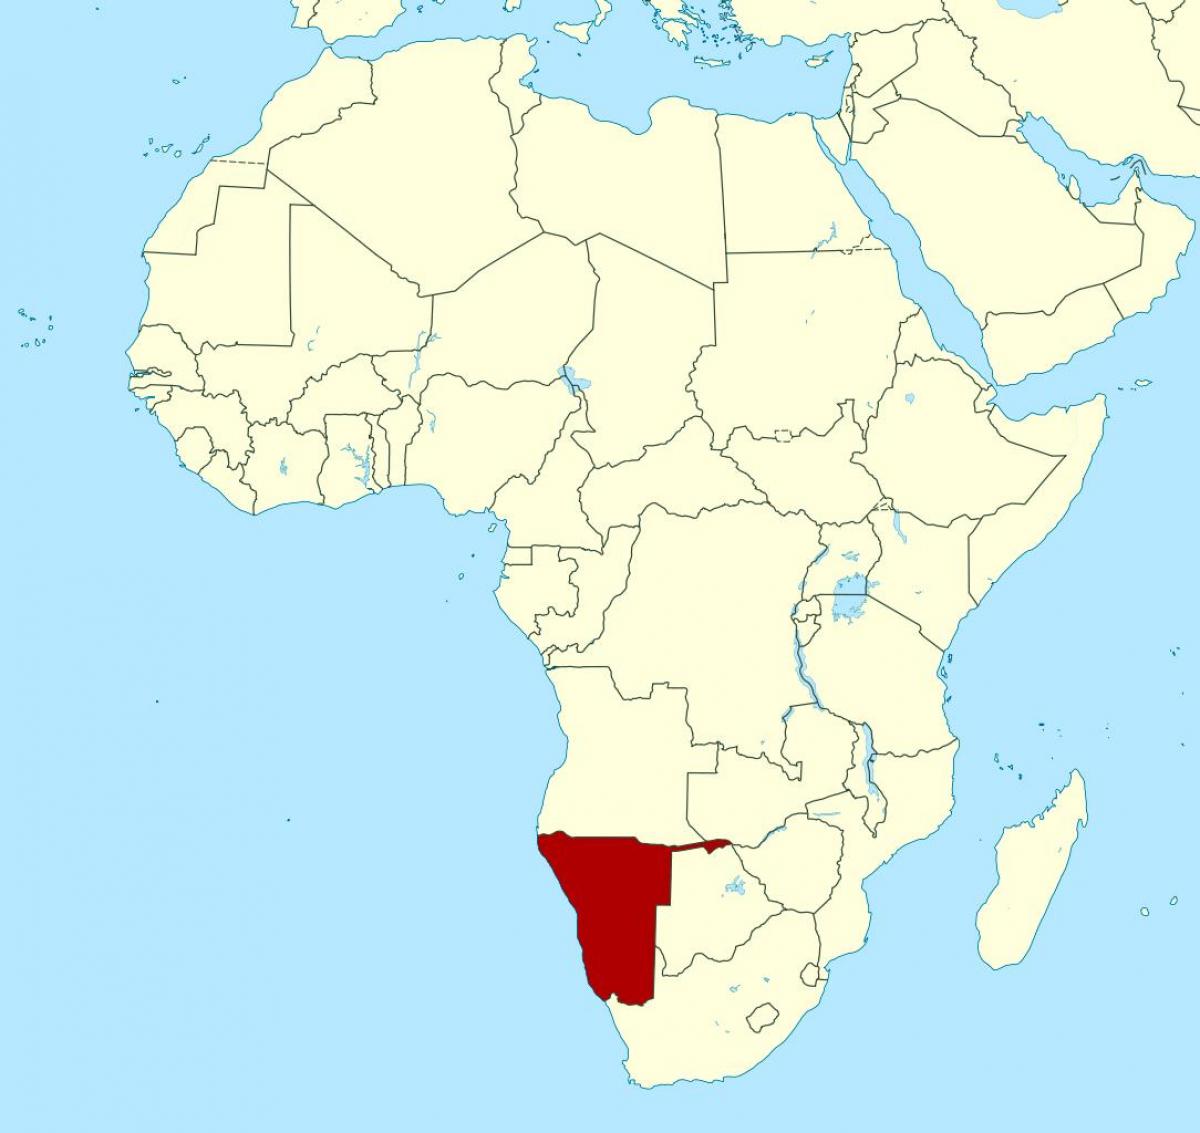 Mapa da Namíbia áfrica